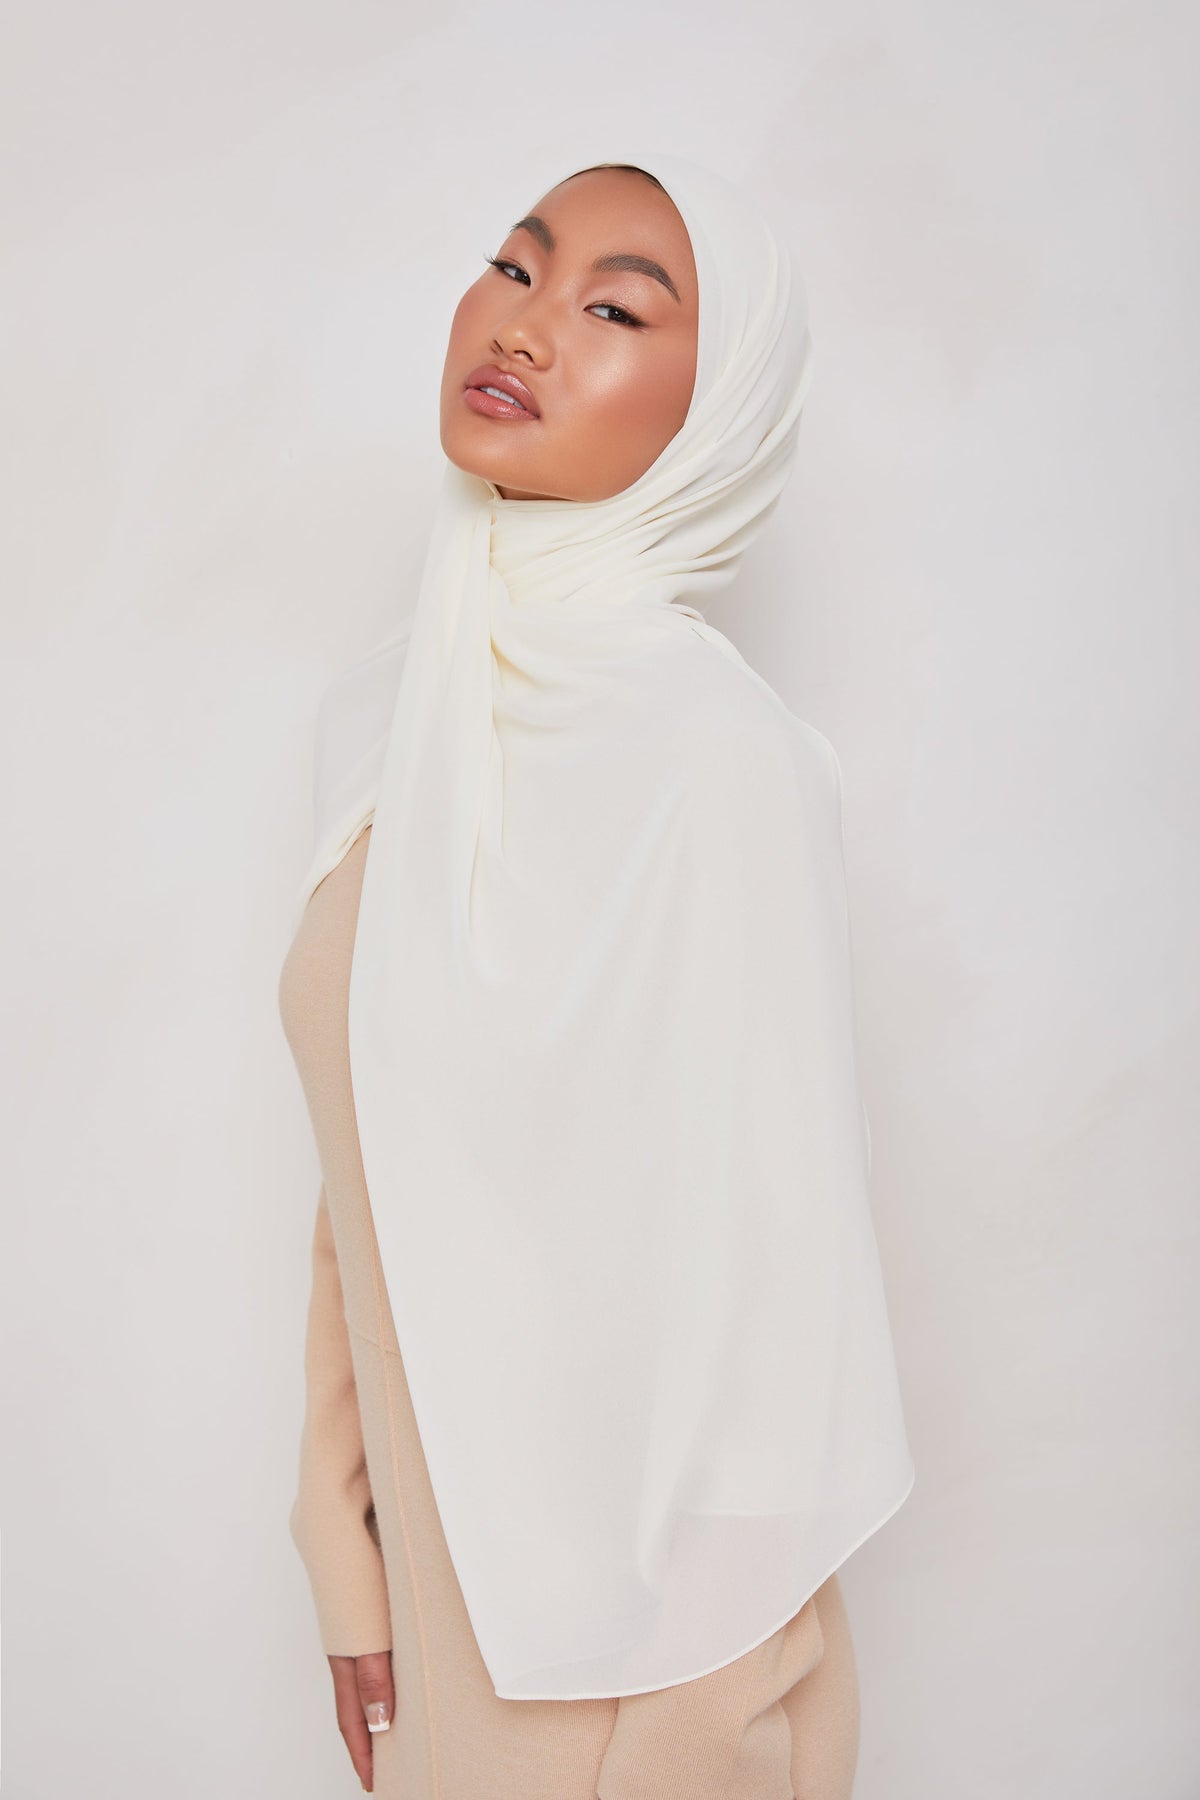 Chiffon LITE Hijab - Lily epschoolboard 